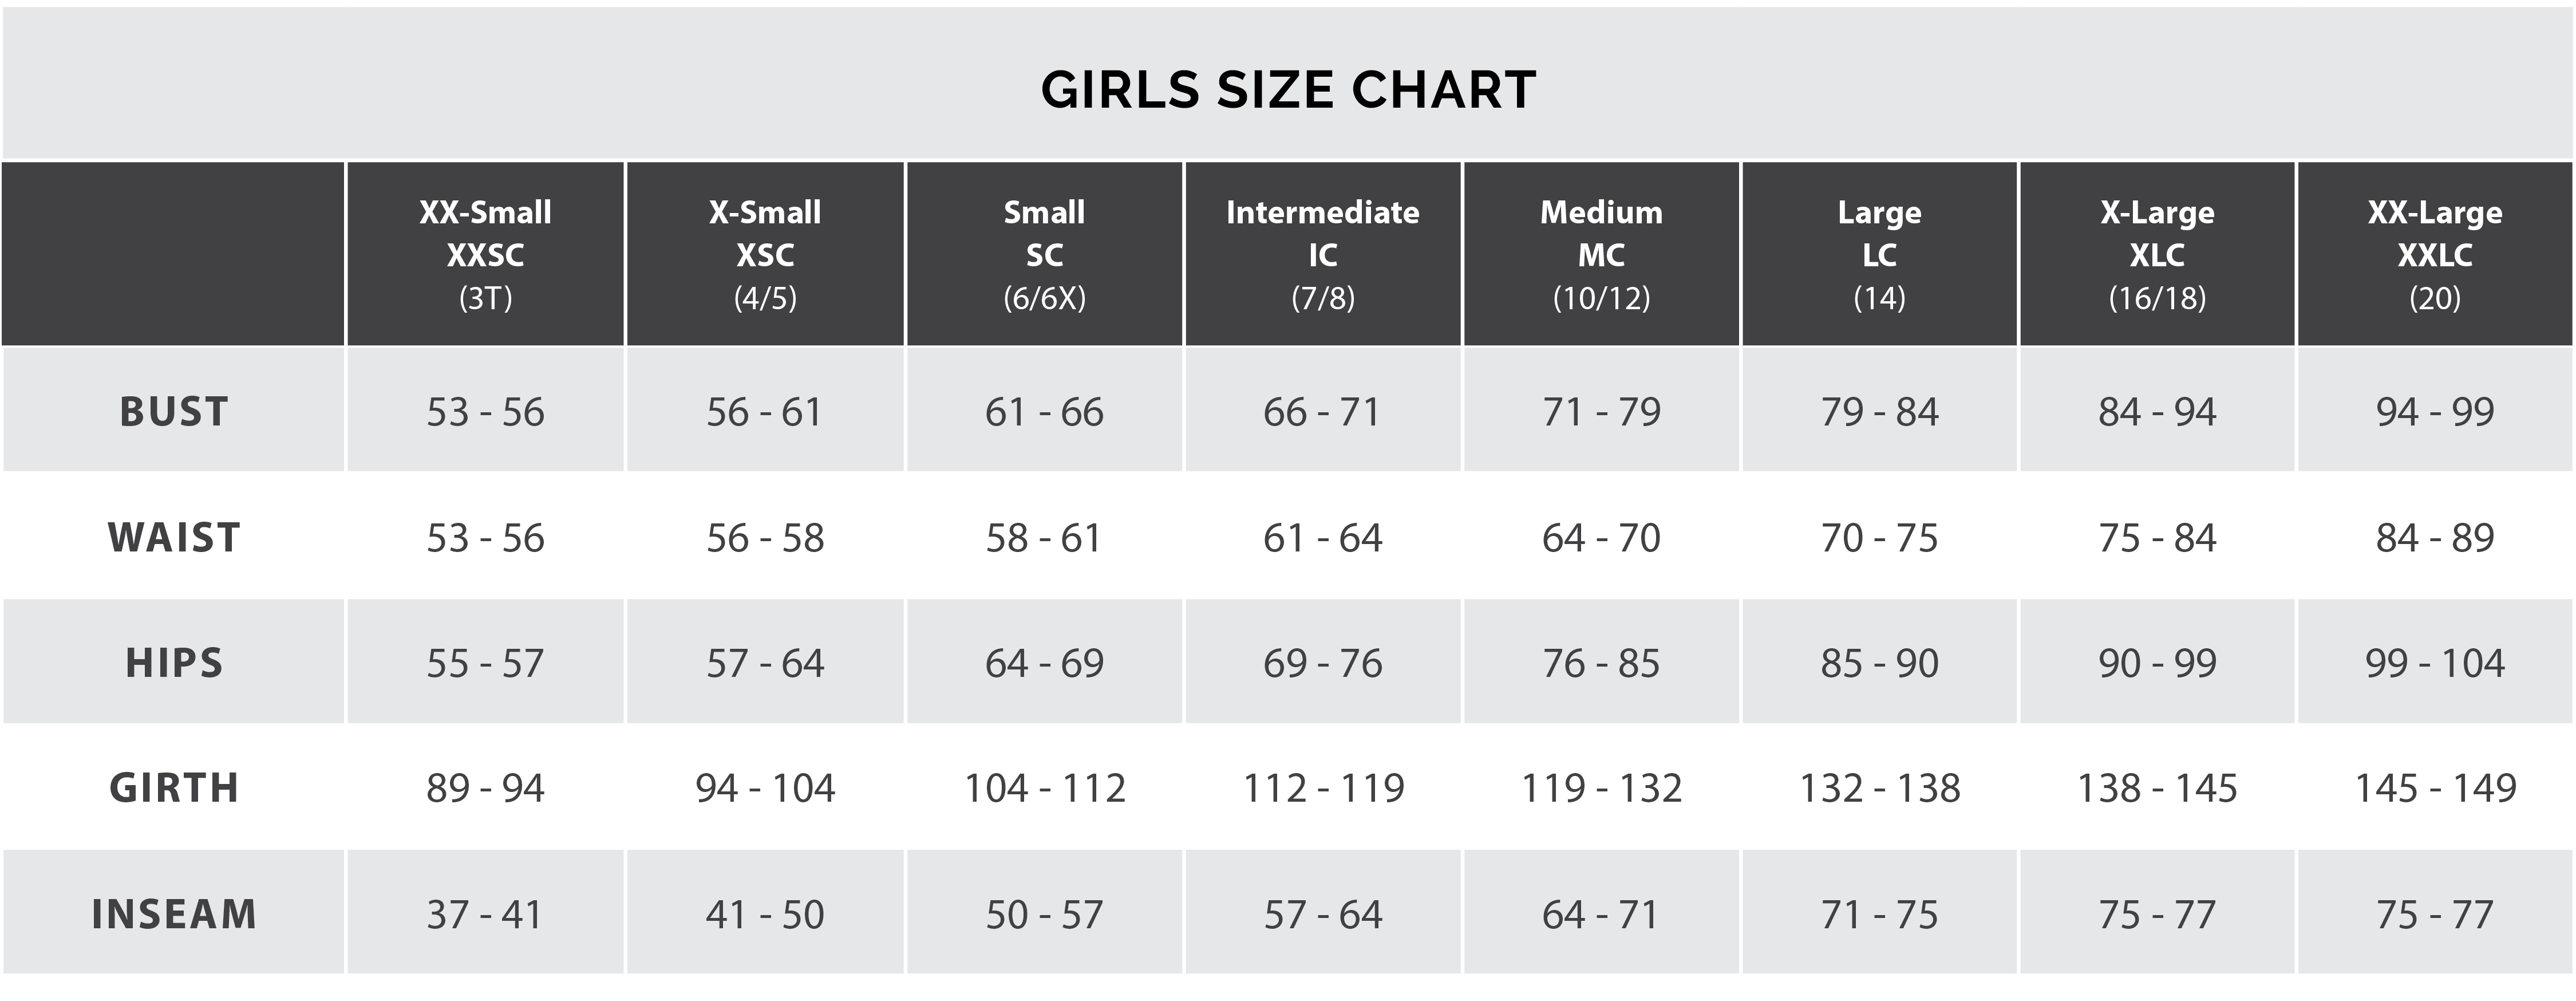 child girls size chart centimetres